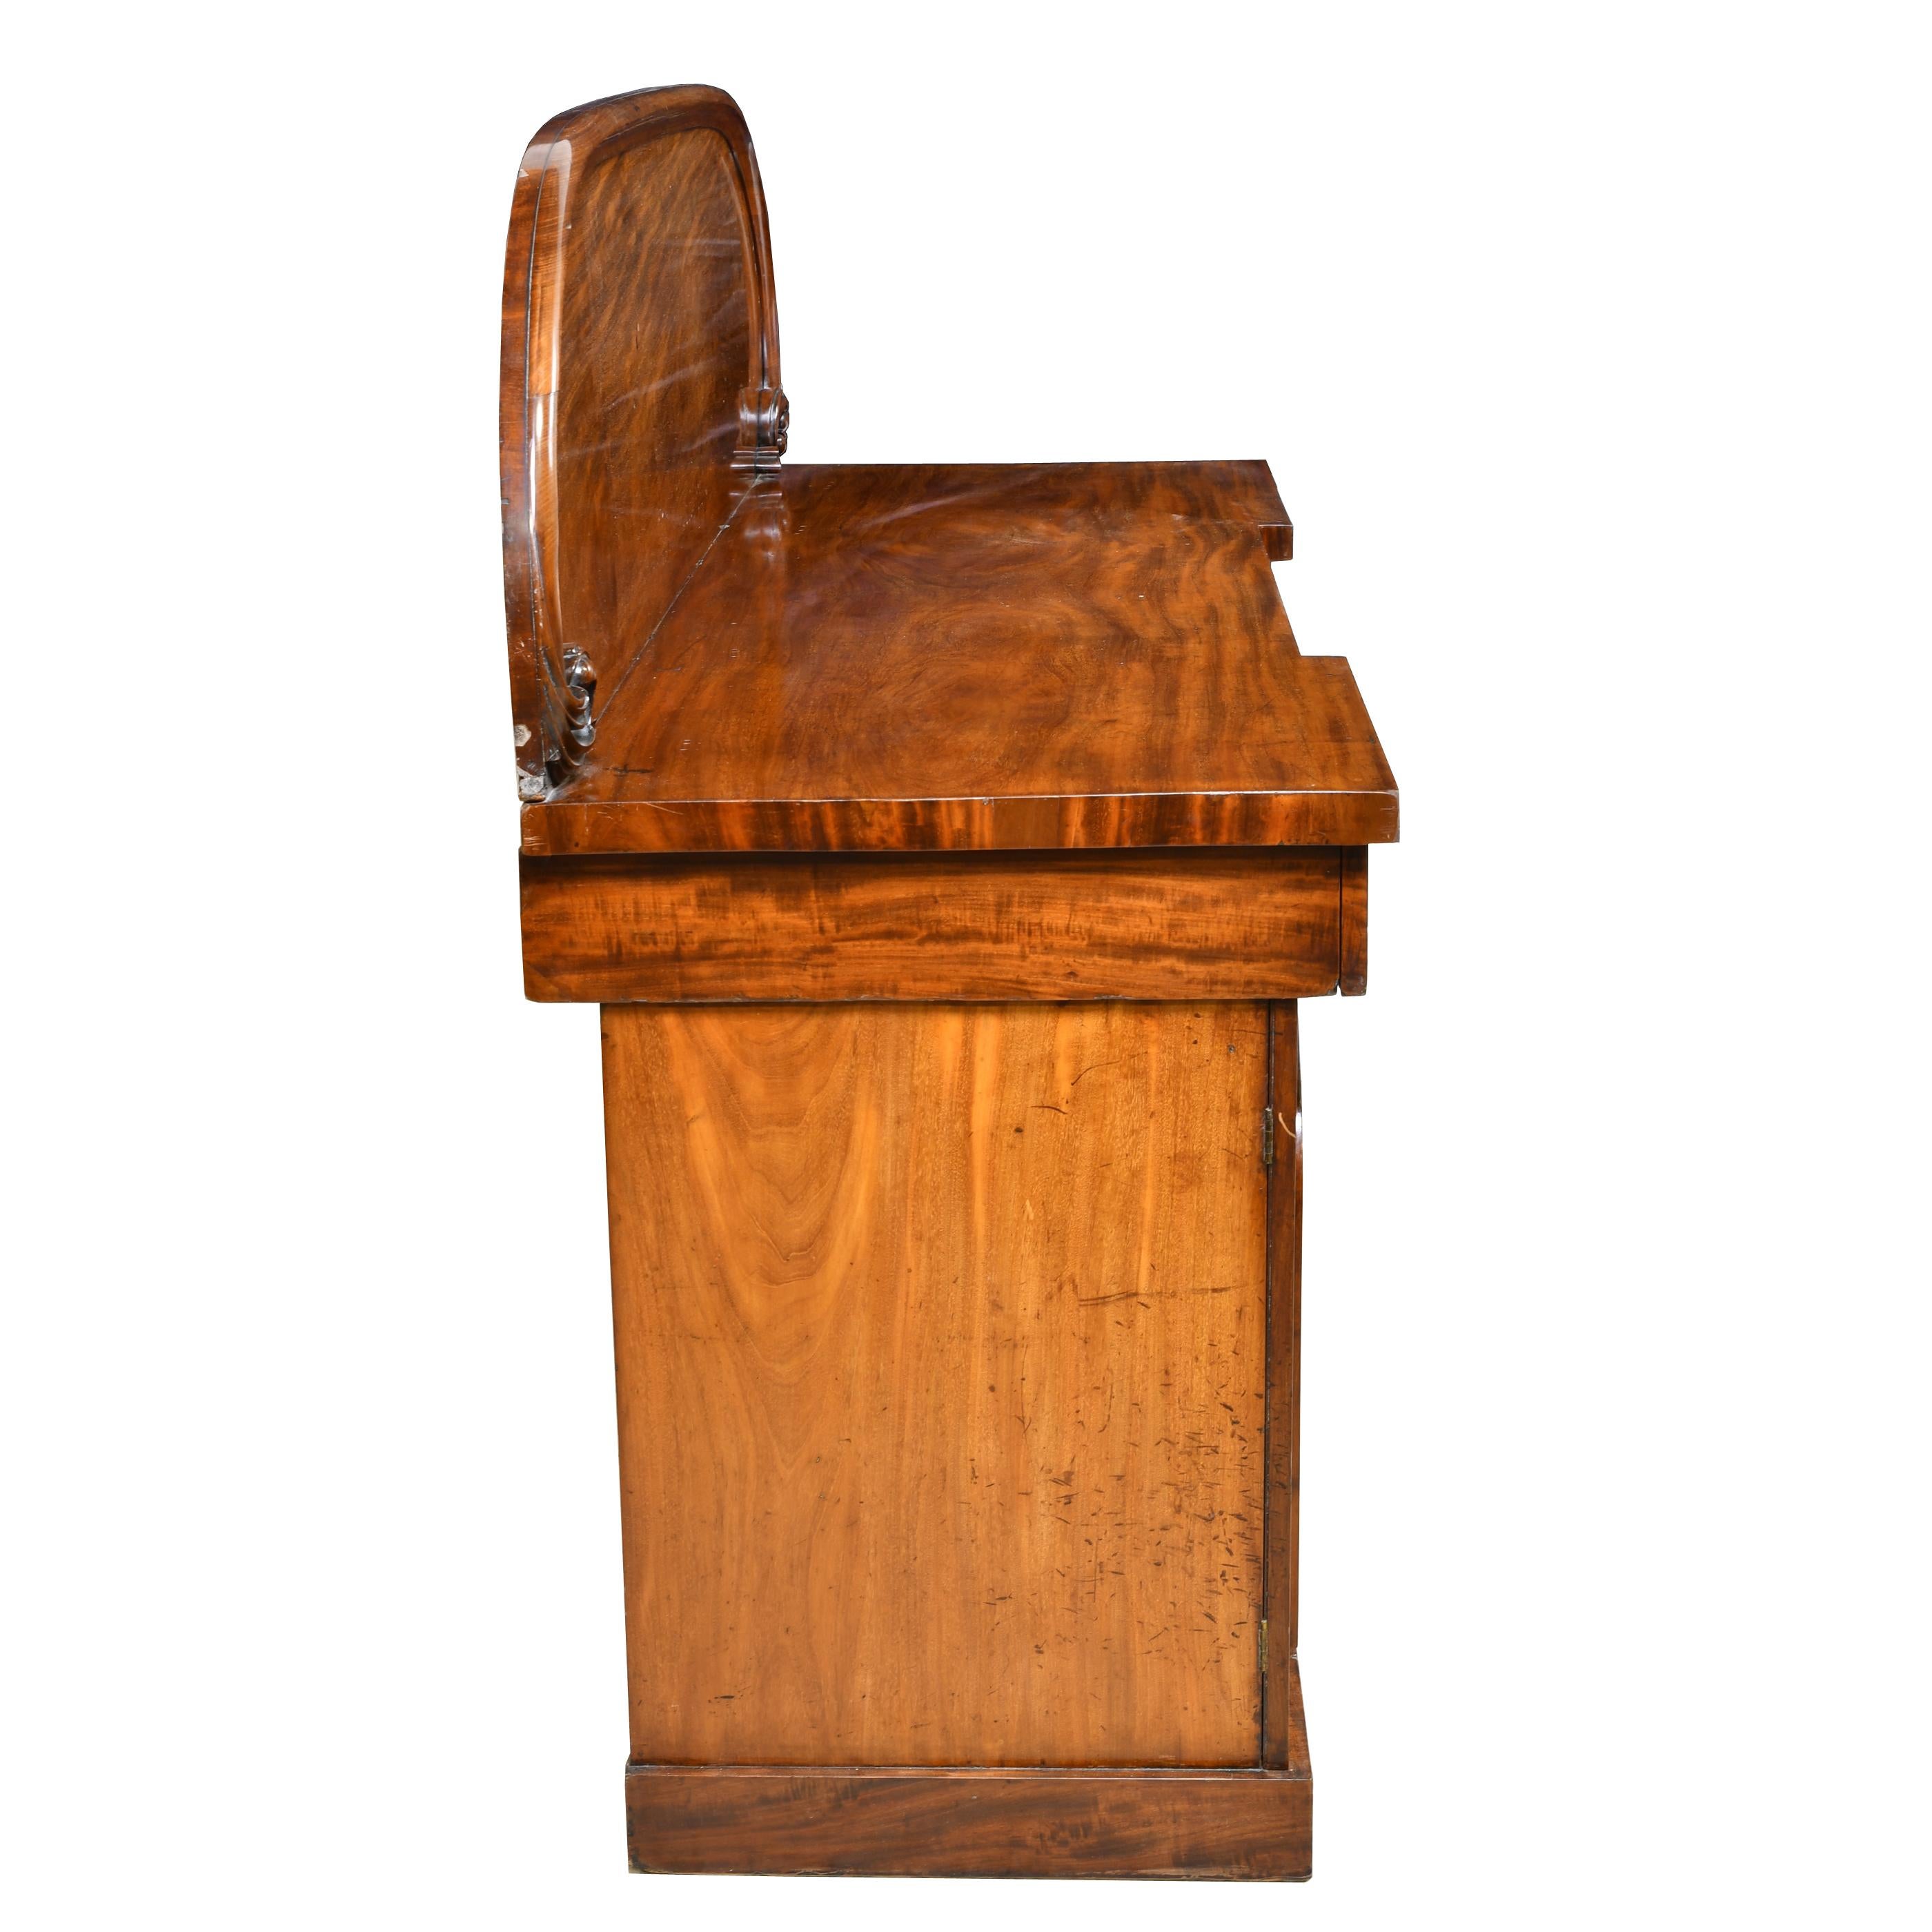 English Victorian Pedestal Base Sideboard in Mahogany, circa 1850 For Sale 3